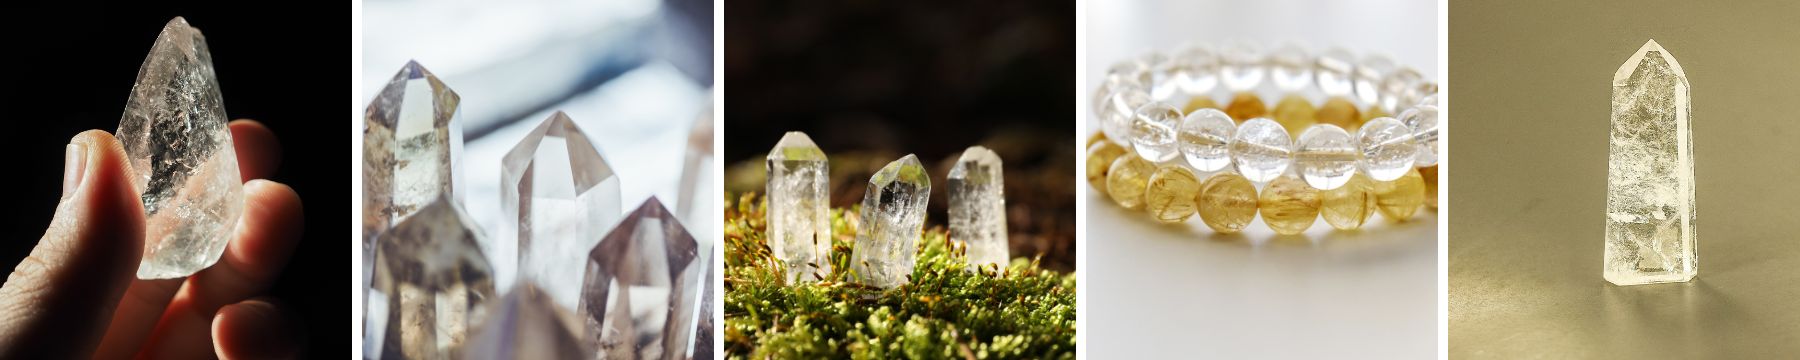 crystals for the winter solstice - clear quartz